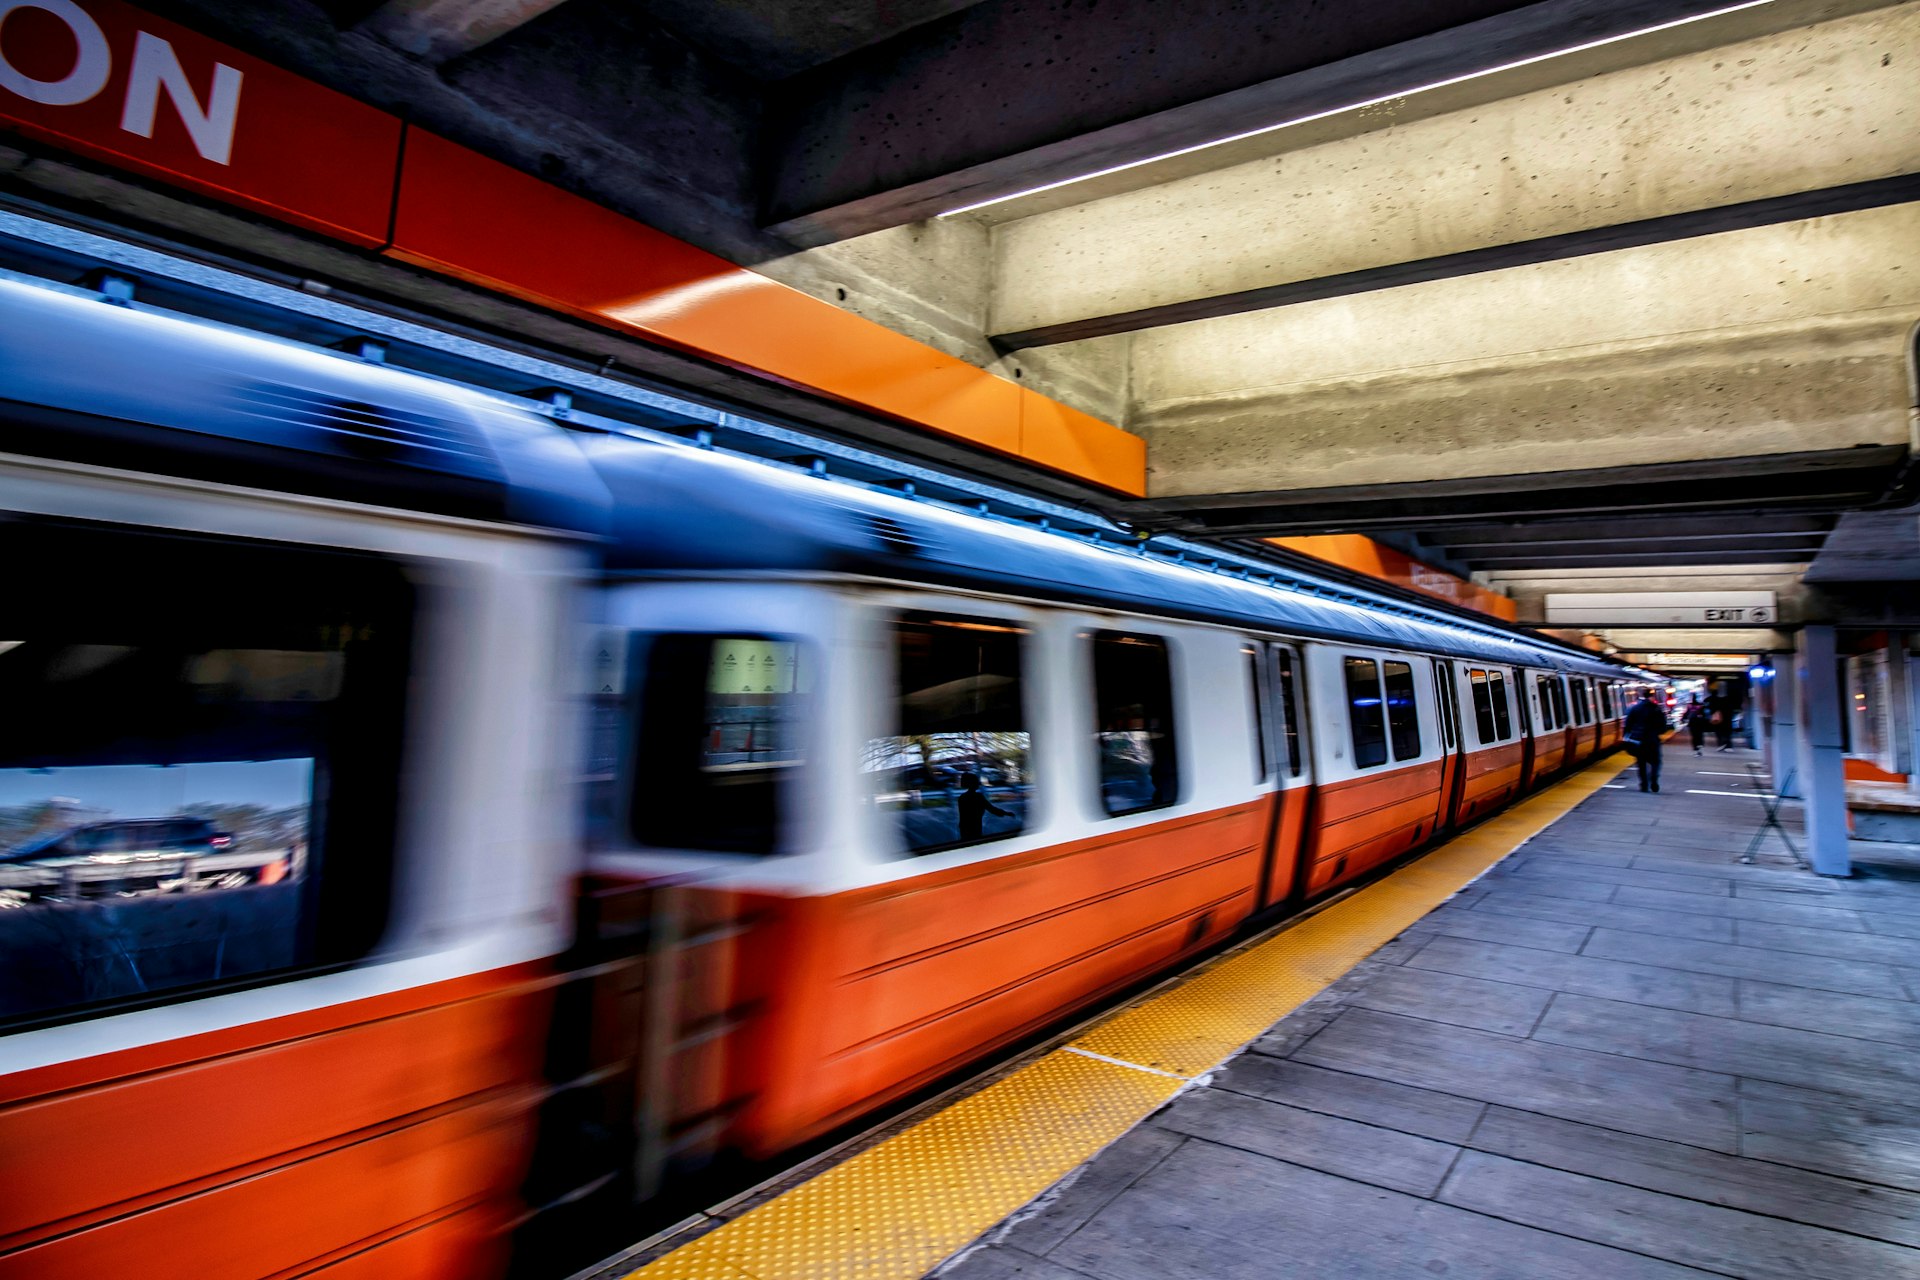 A subway train passes through a station as a person walks along the platform